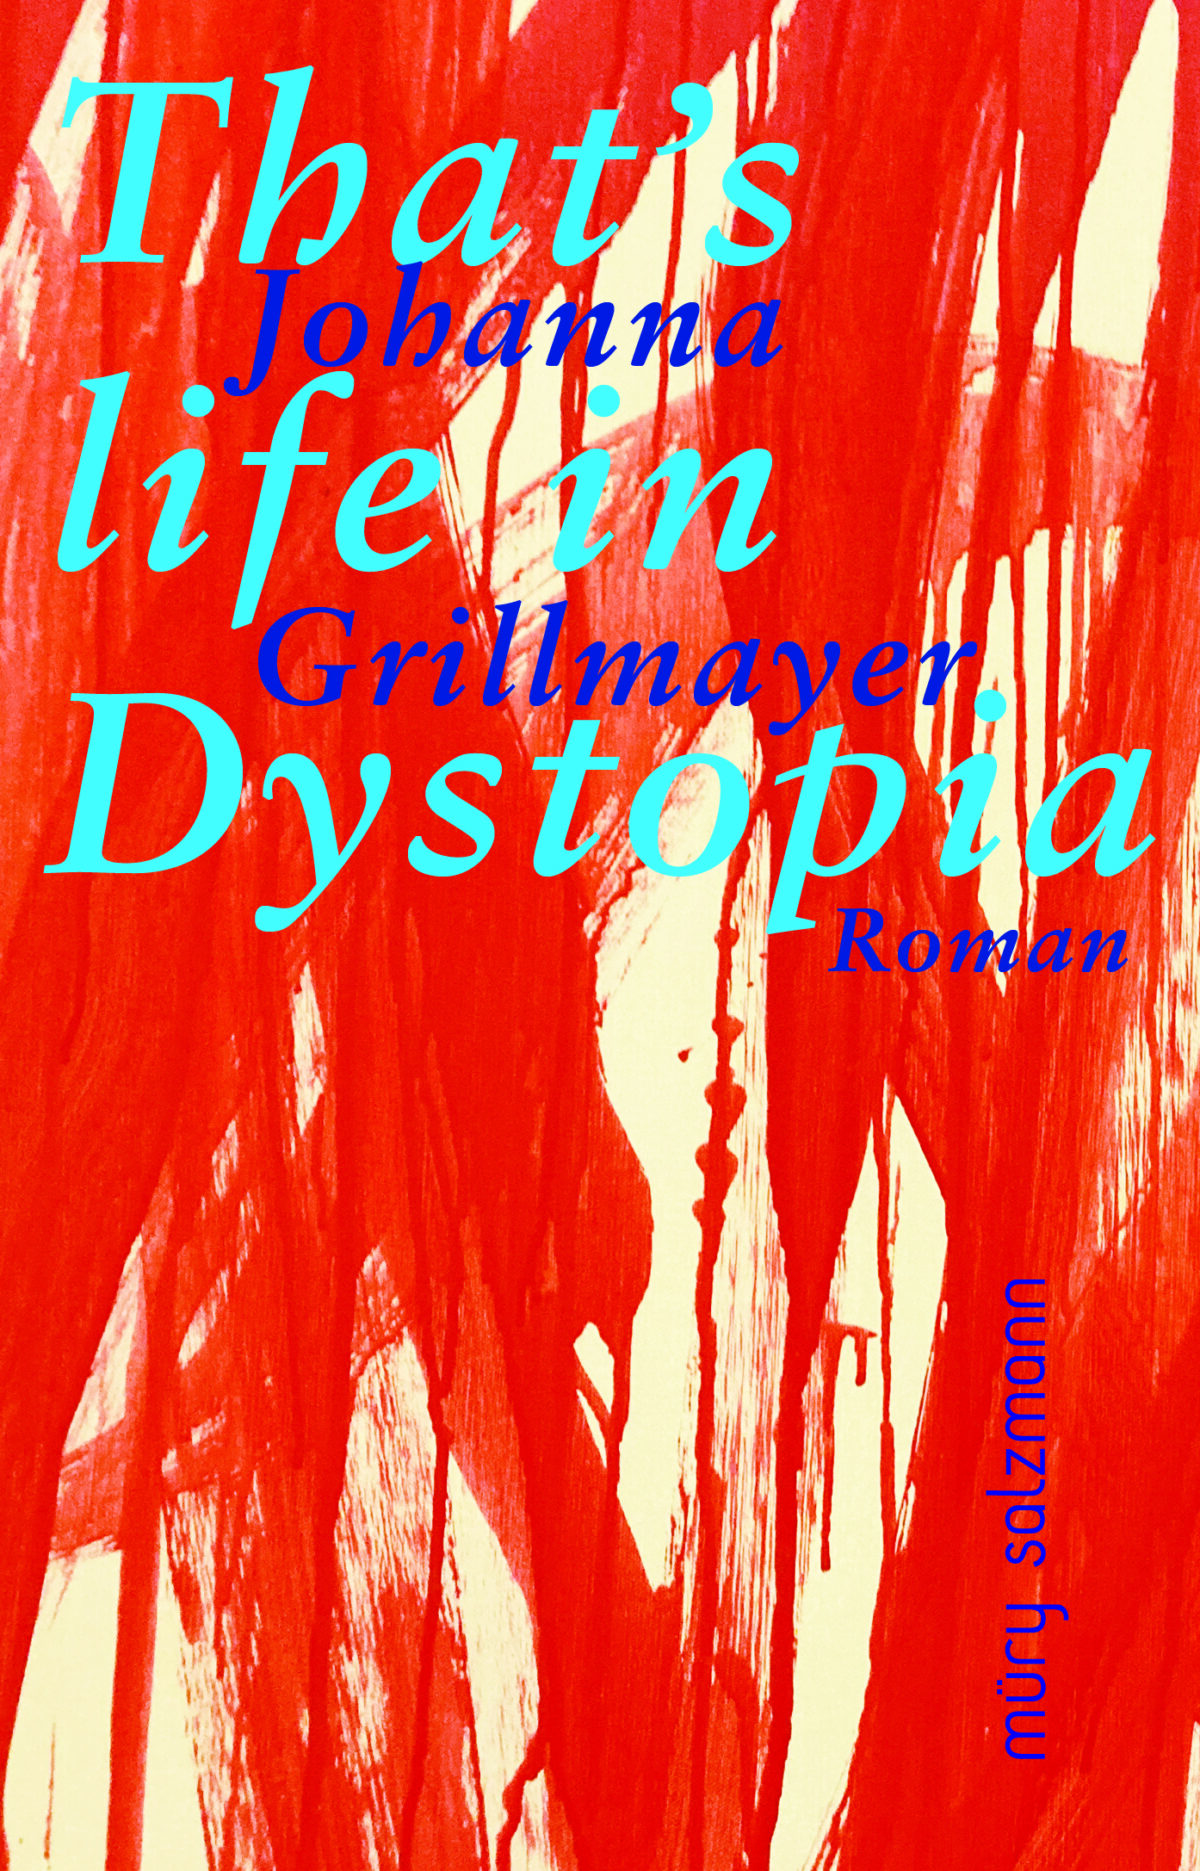 Cover Johanna Grillmayer That's life in Dystopia, Verlag Müry Salzmann 2023